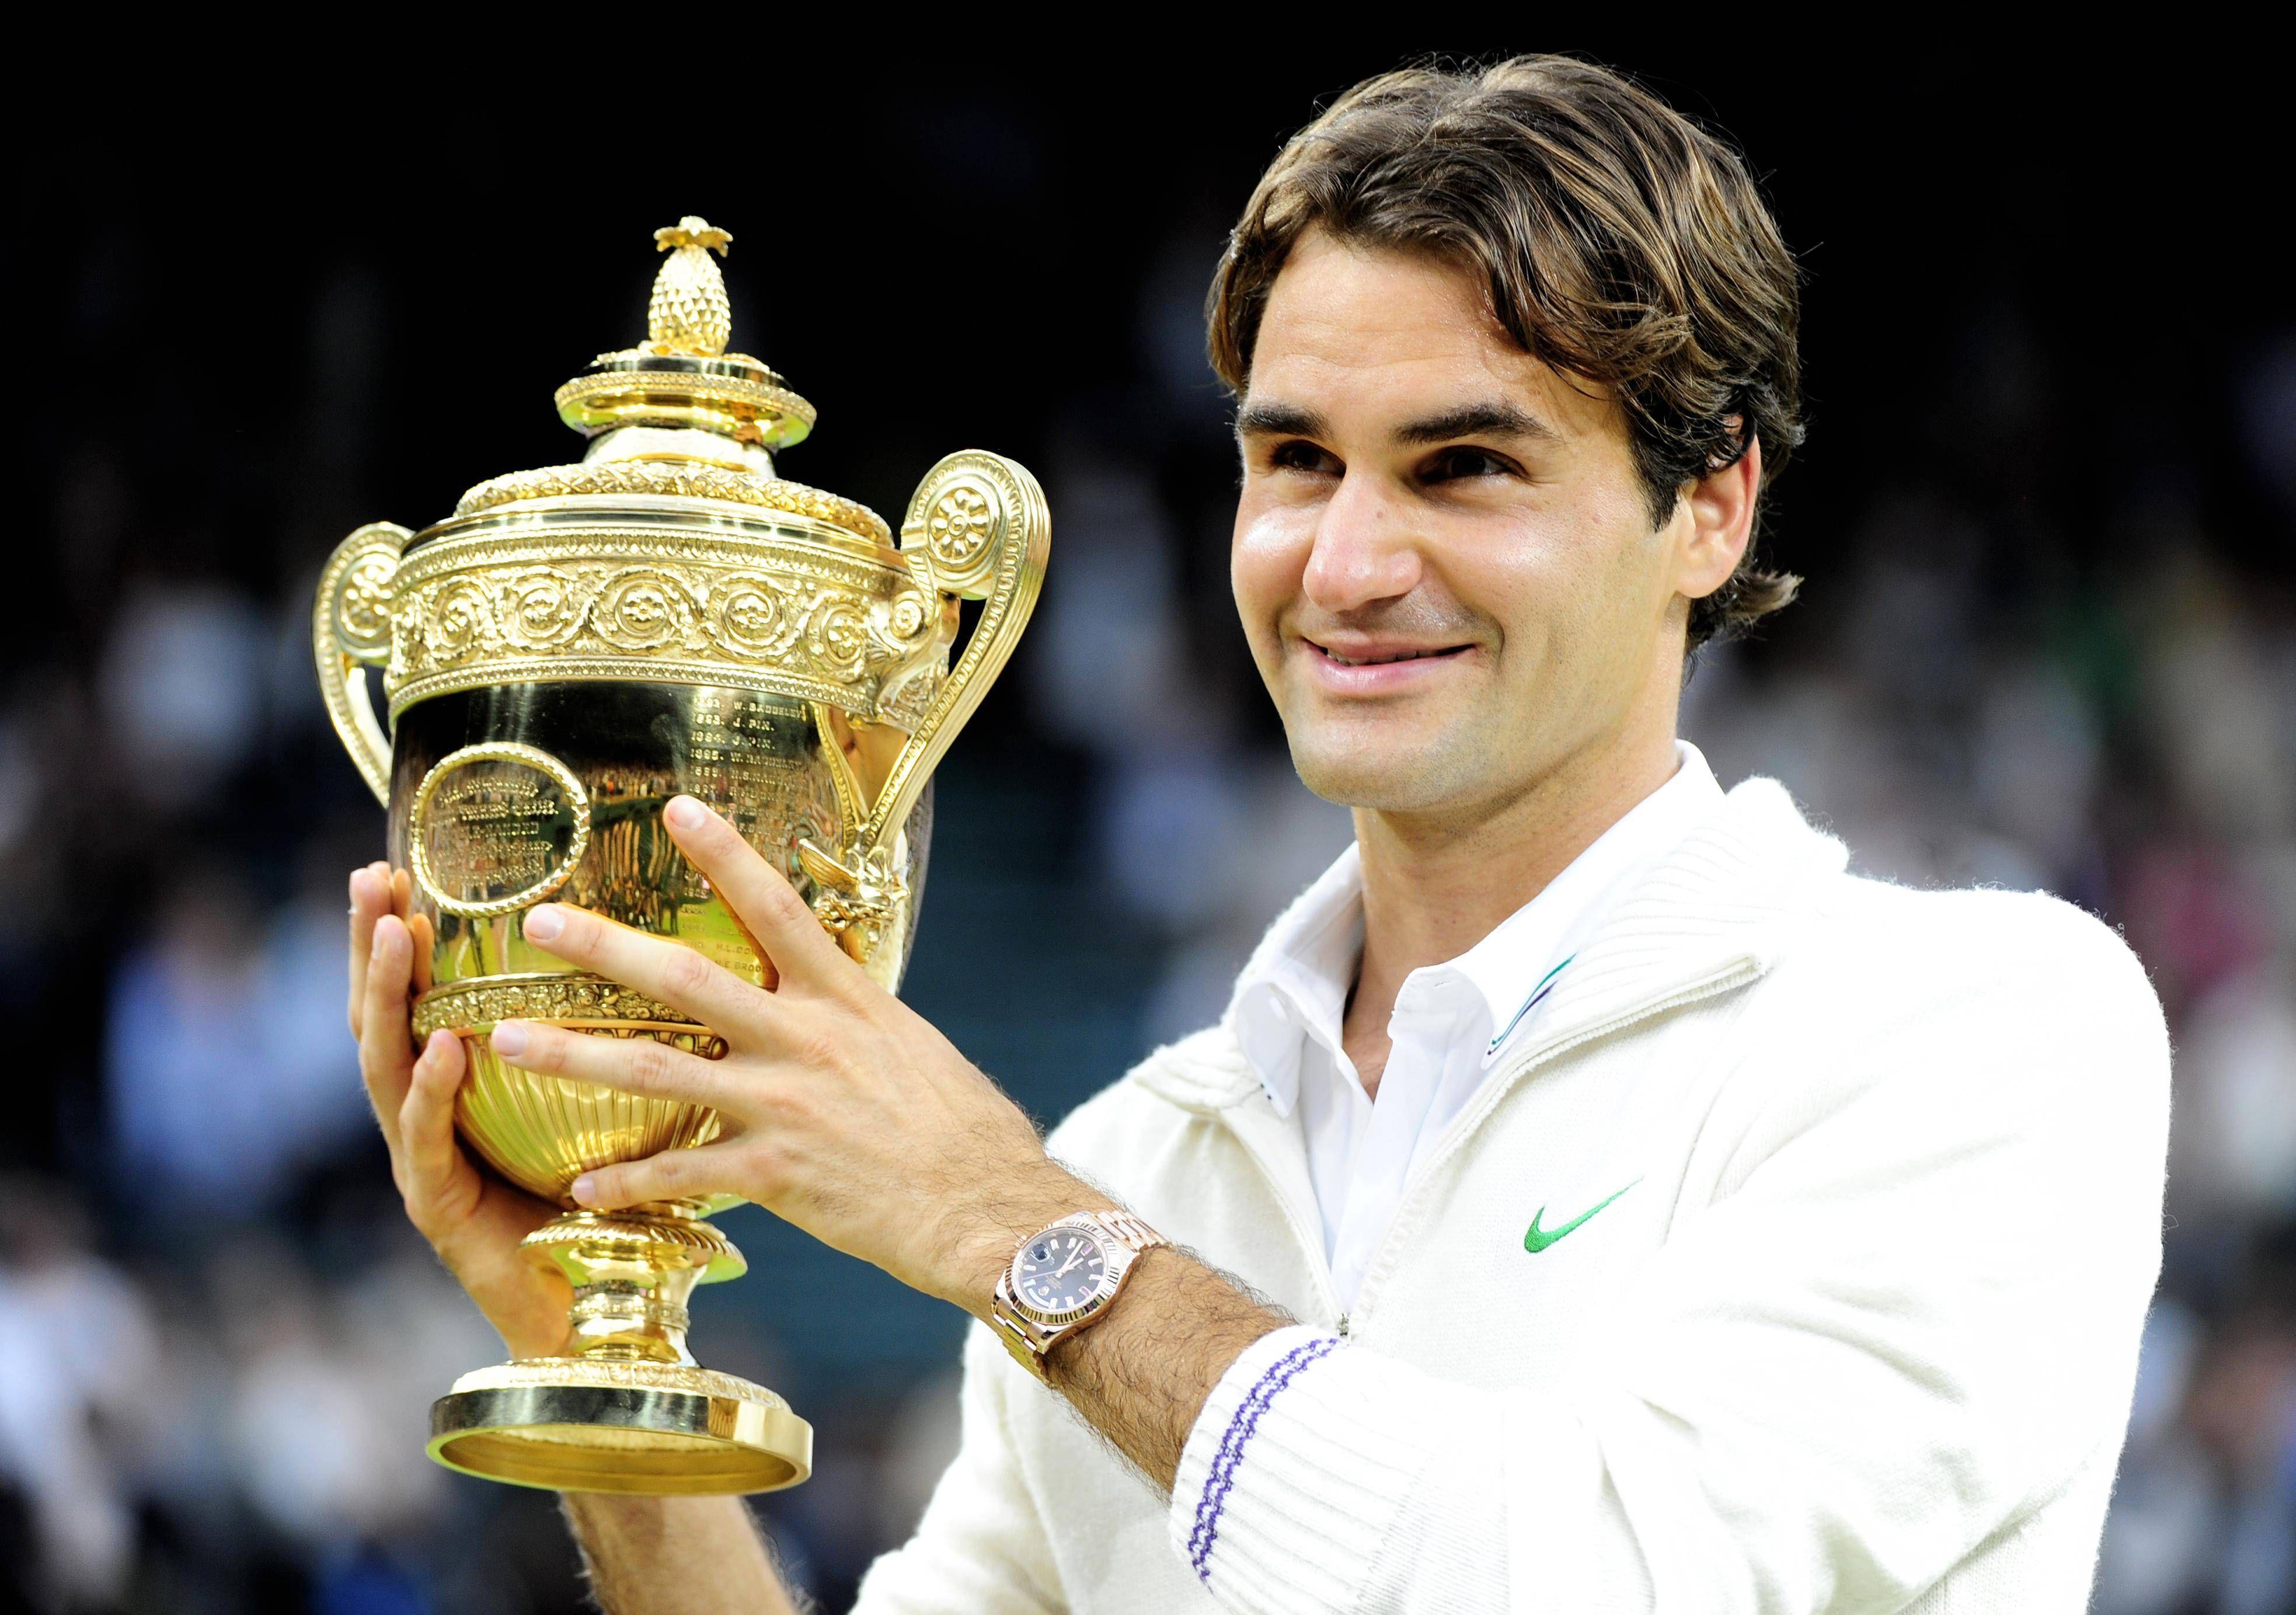 FunMozar – Roger Federer